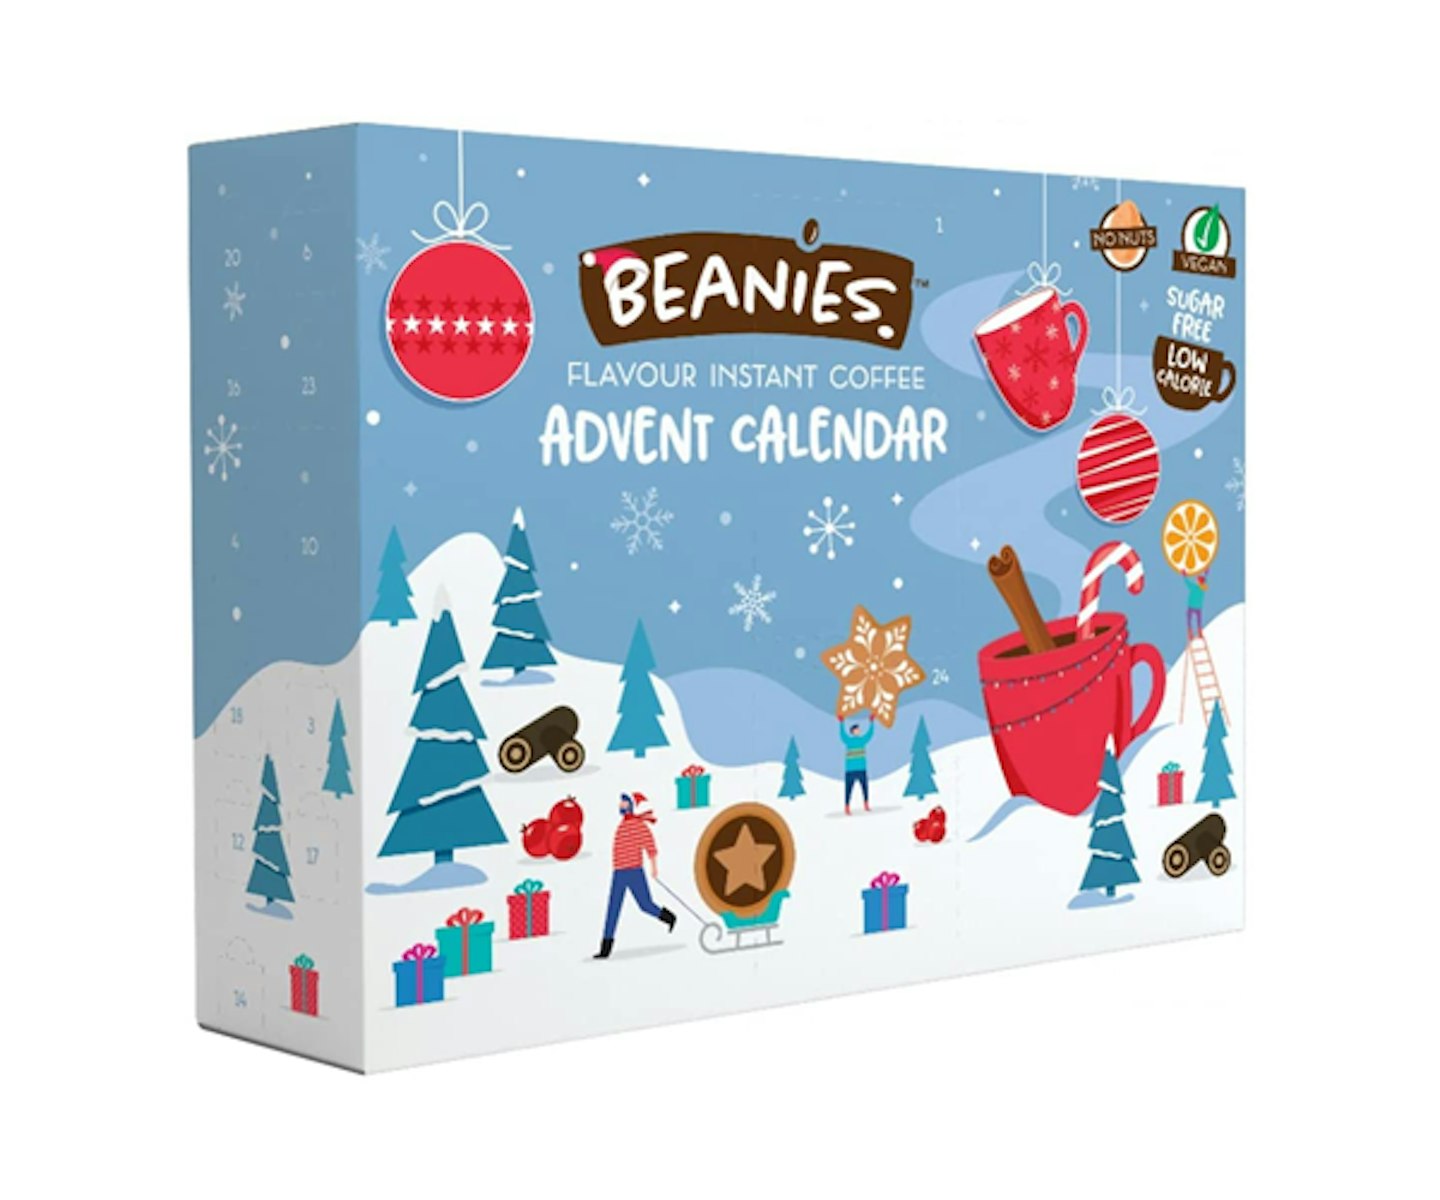 Beanies Flavored Coffee Advent Calendar